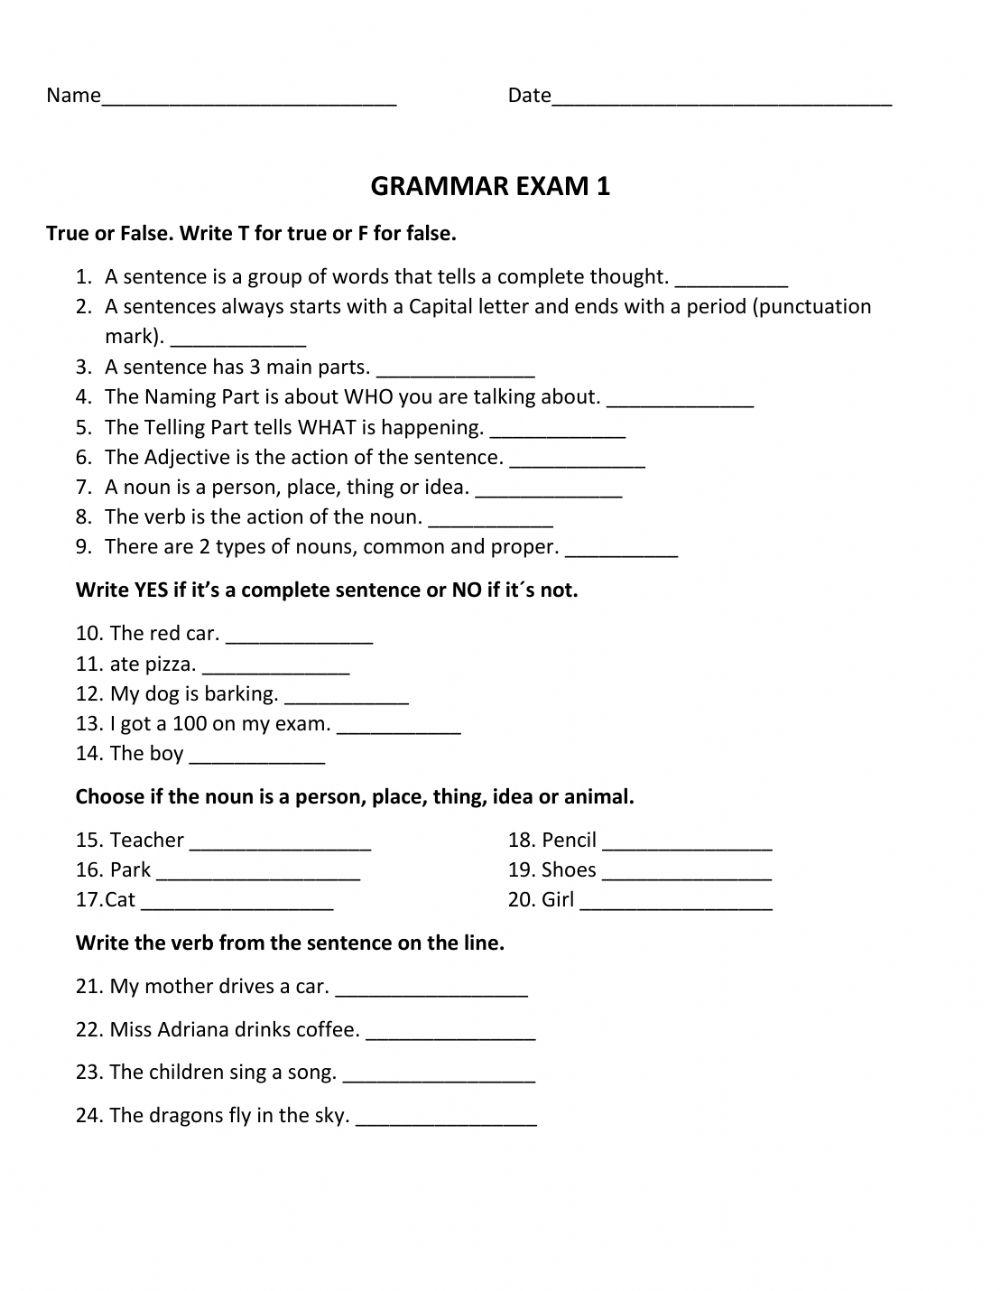 Grammar Exam 1